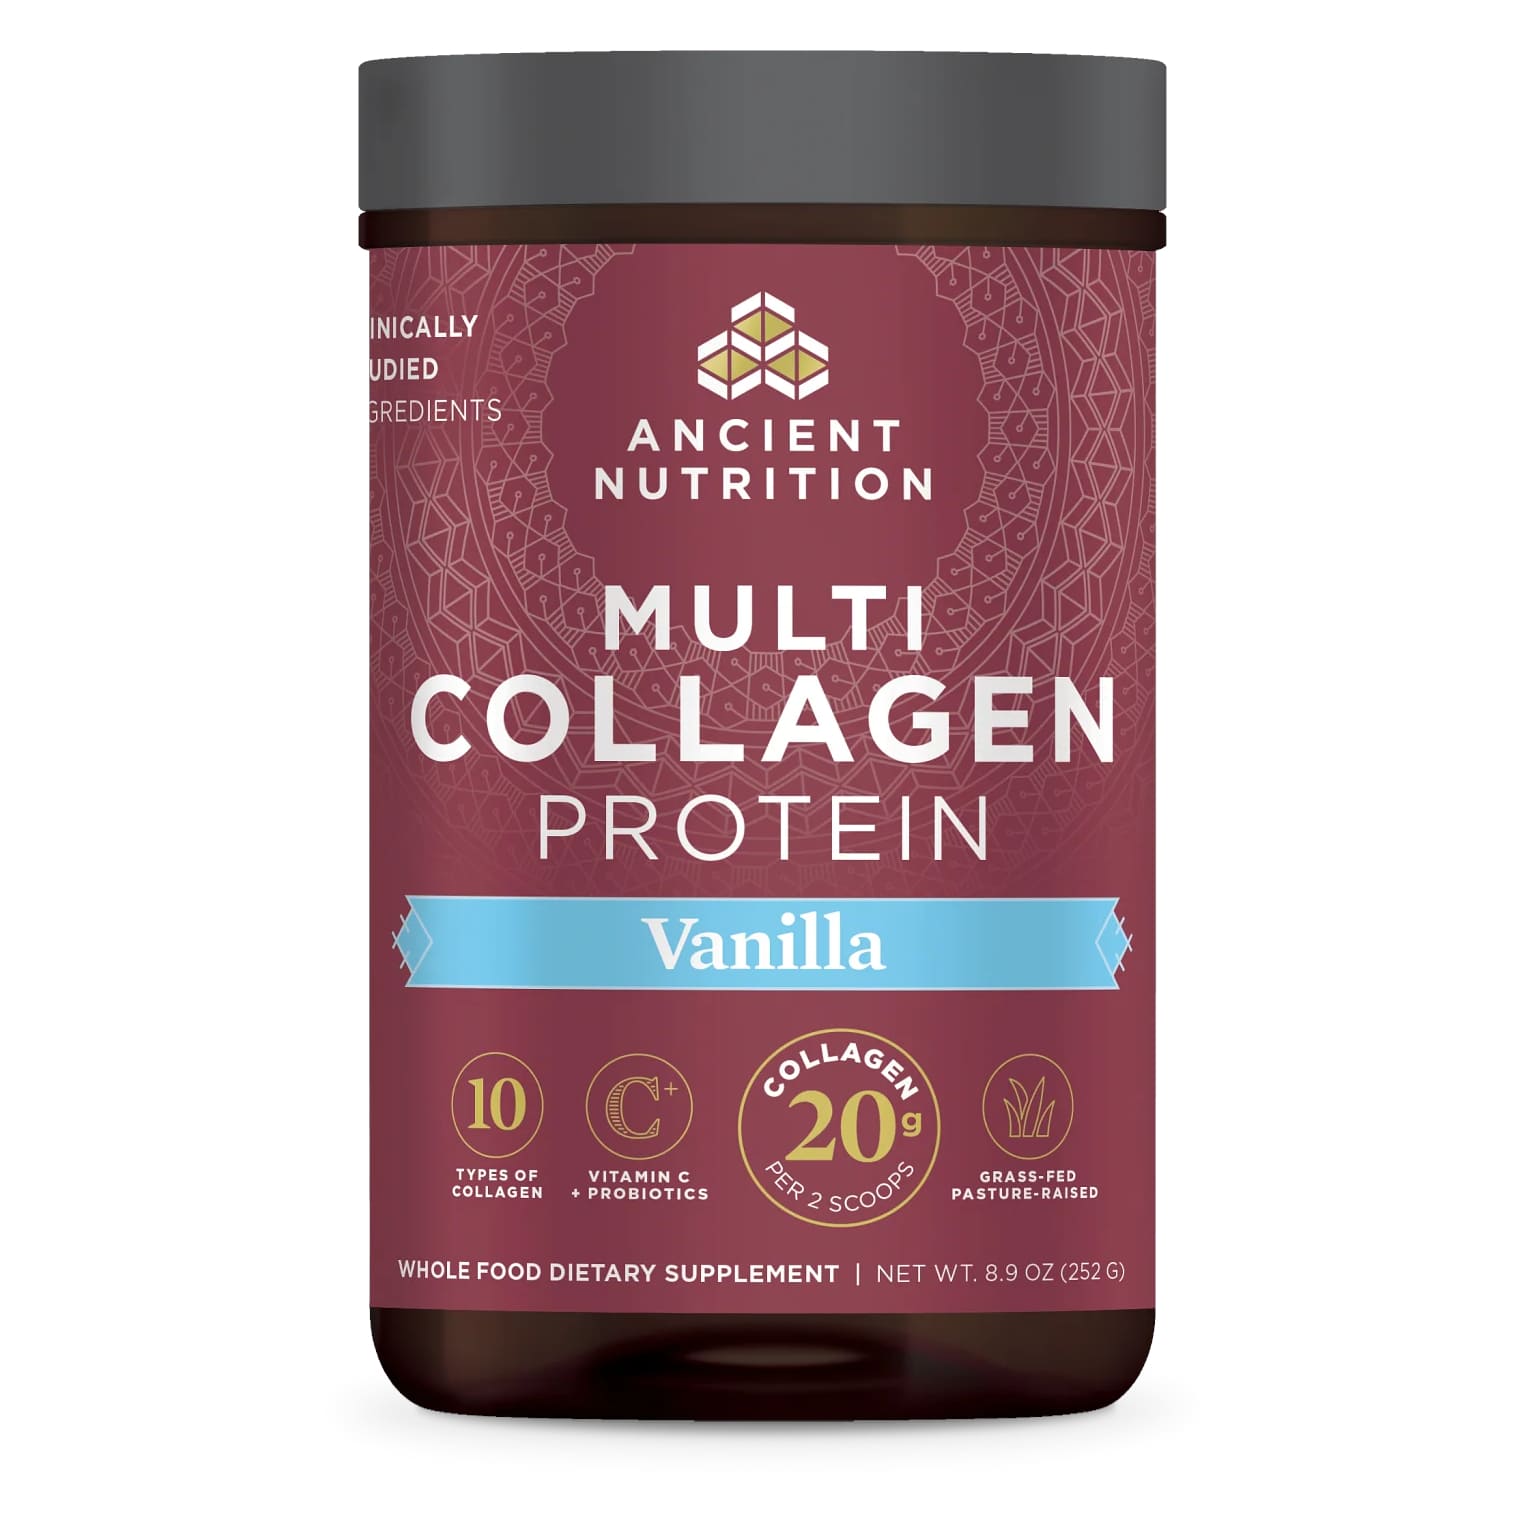 Коллаген Ancient Nutrition Multi Protein 10 Types Vitamin C + Probiotics Vanilla, 252 г коллаген horbaach multi protein 908 гр